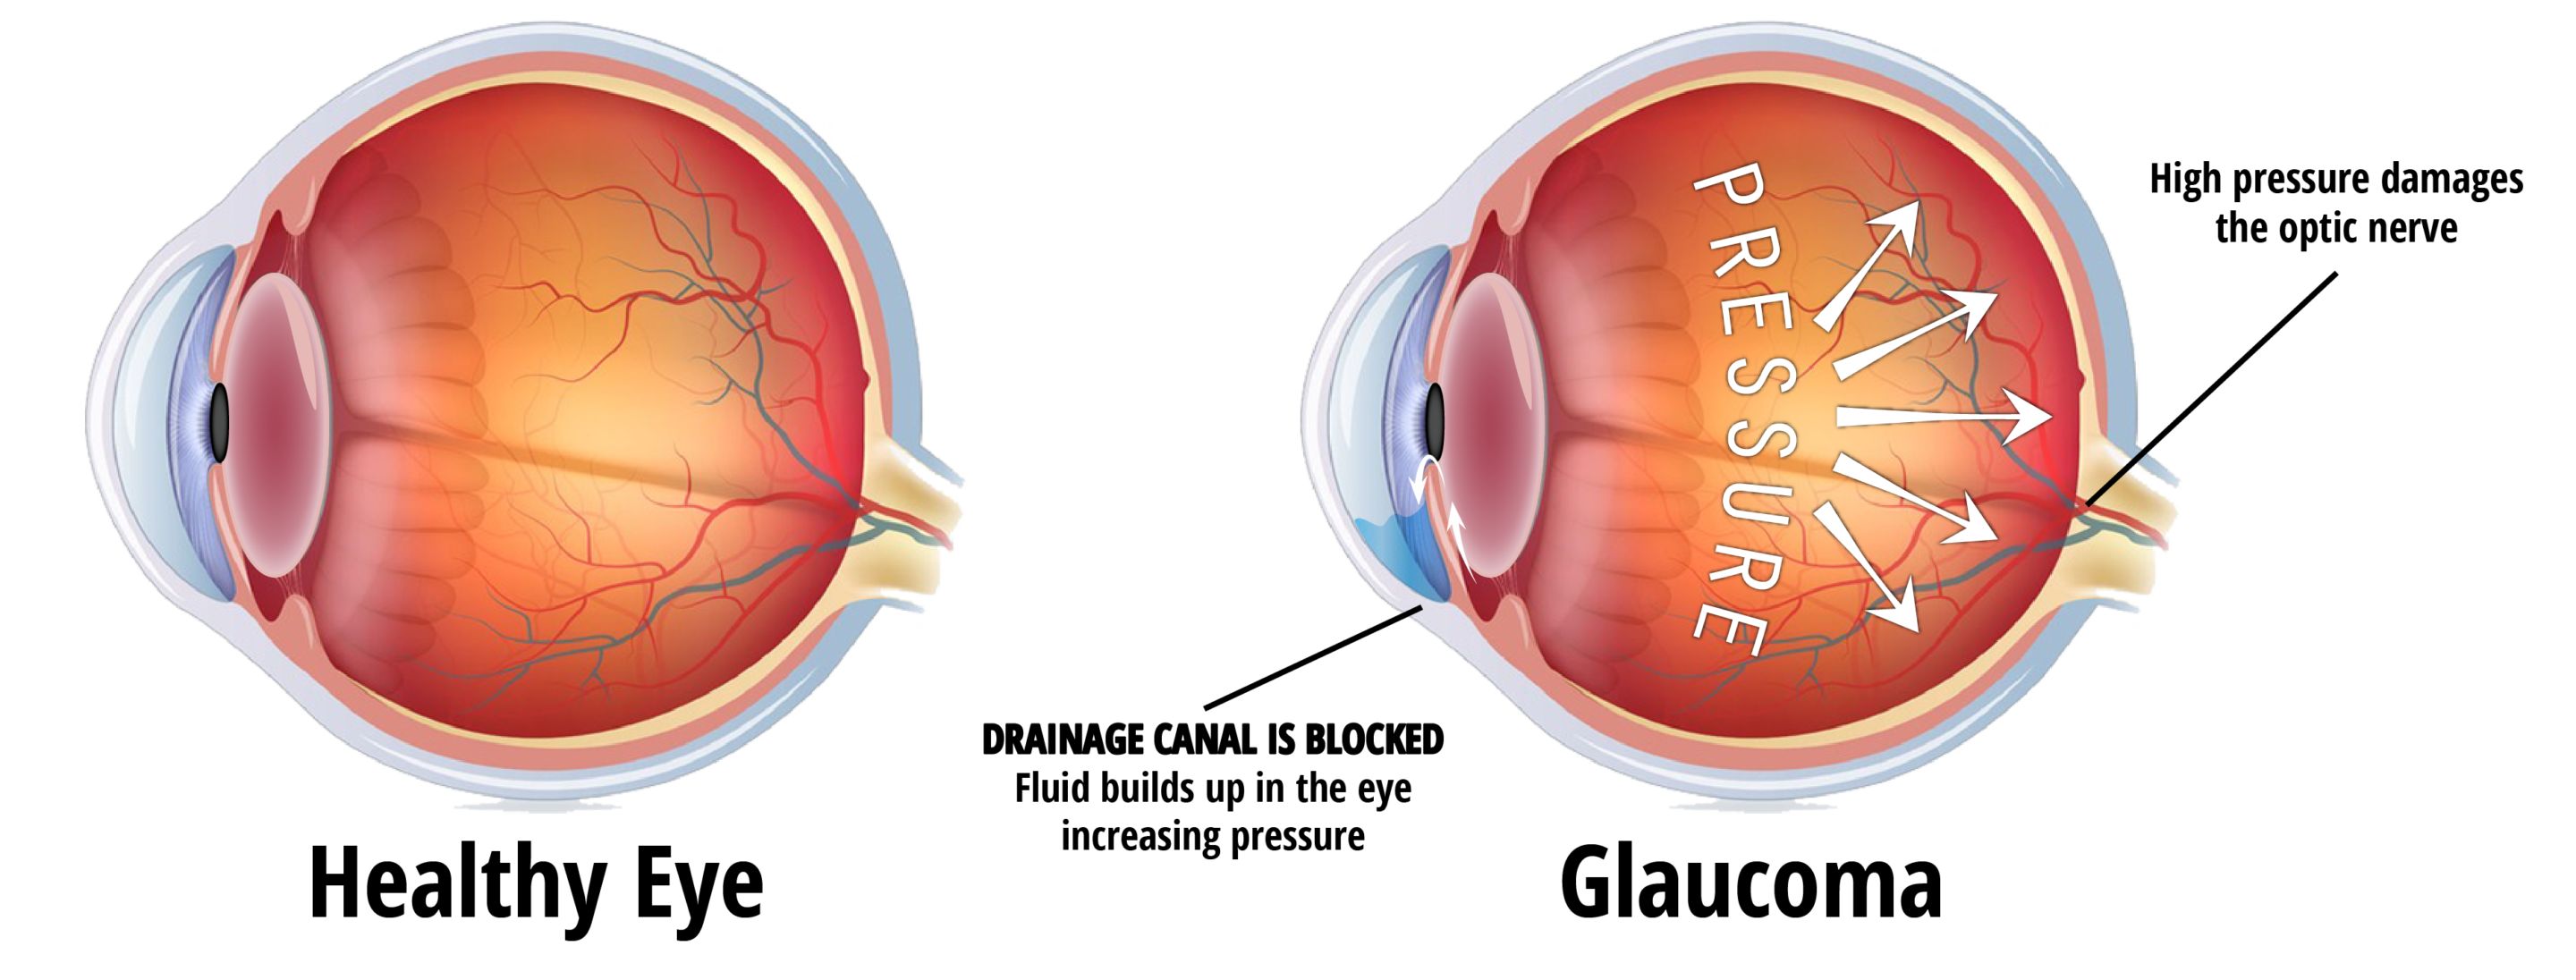 Healthy Eye Vs An Eye With Glaucoma